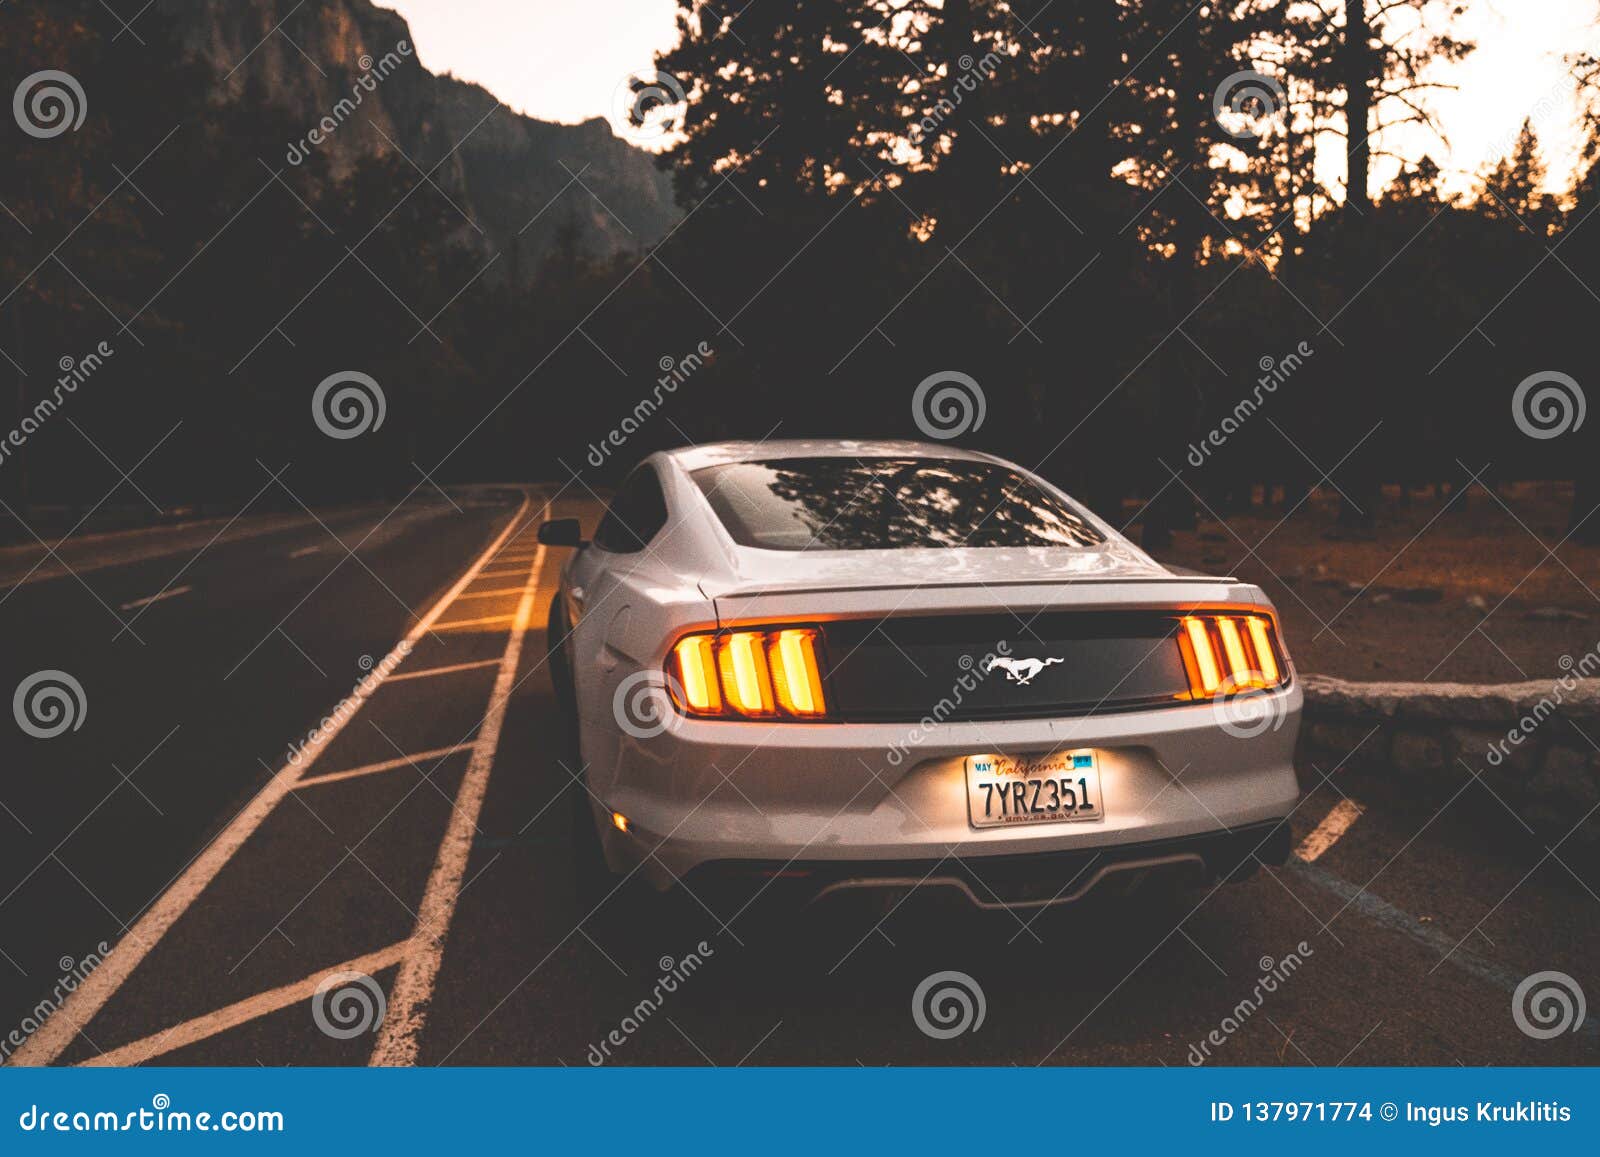 Mooi Wit Ford Mustang GT Parkeerde in Het Van Het Nationale Park Van Yosemite Stock Afbeelding - Image of hemel, retro: 137971774